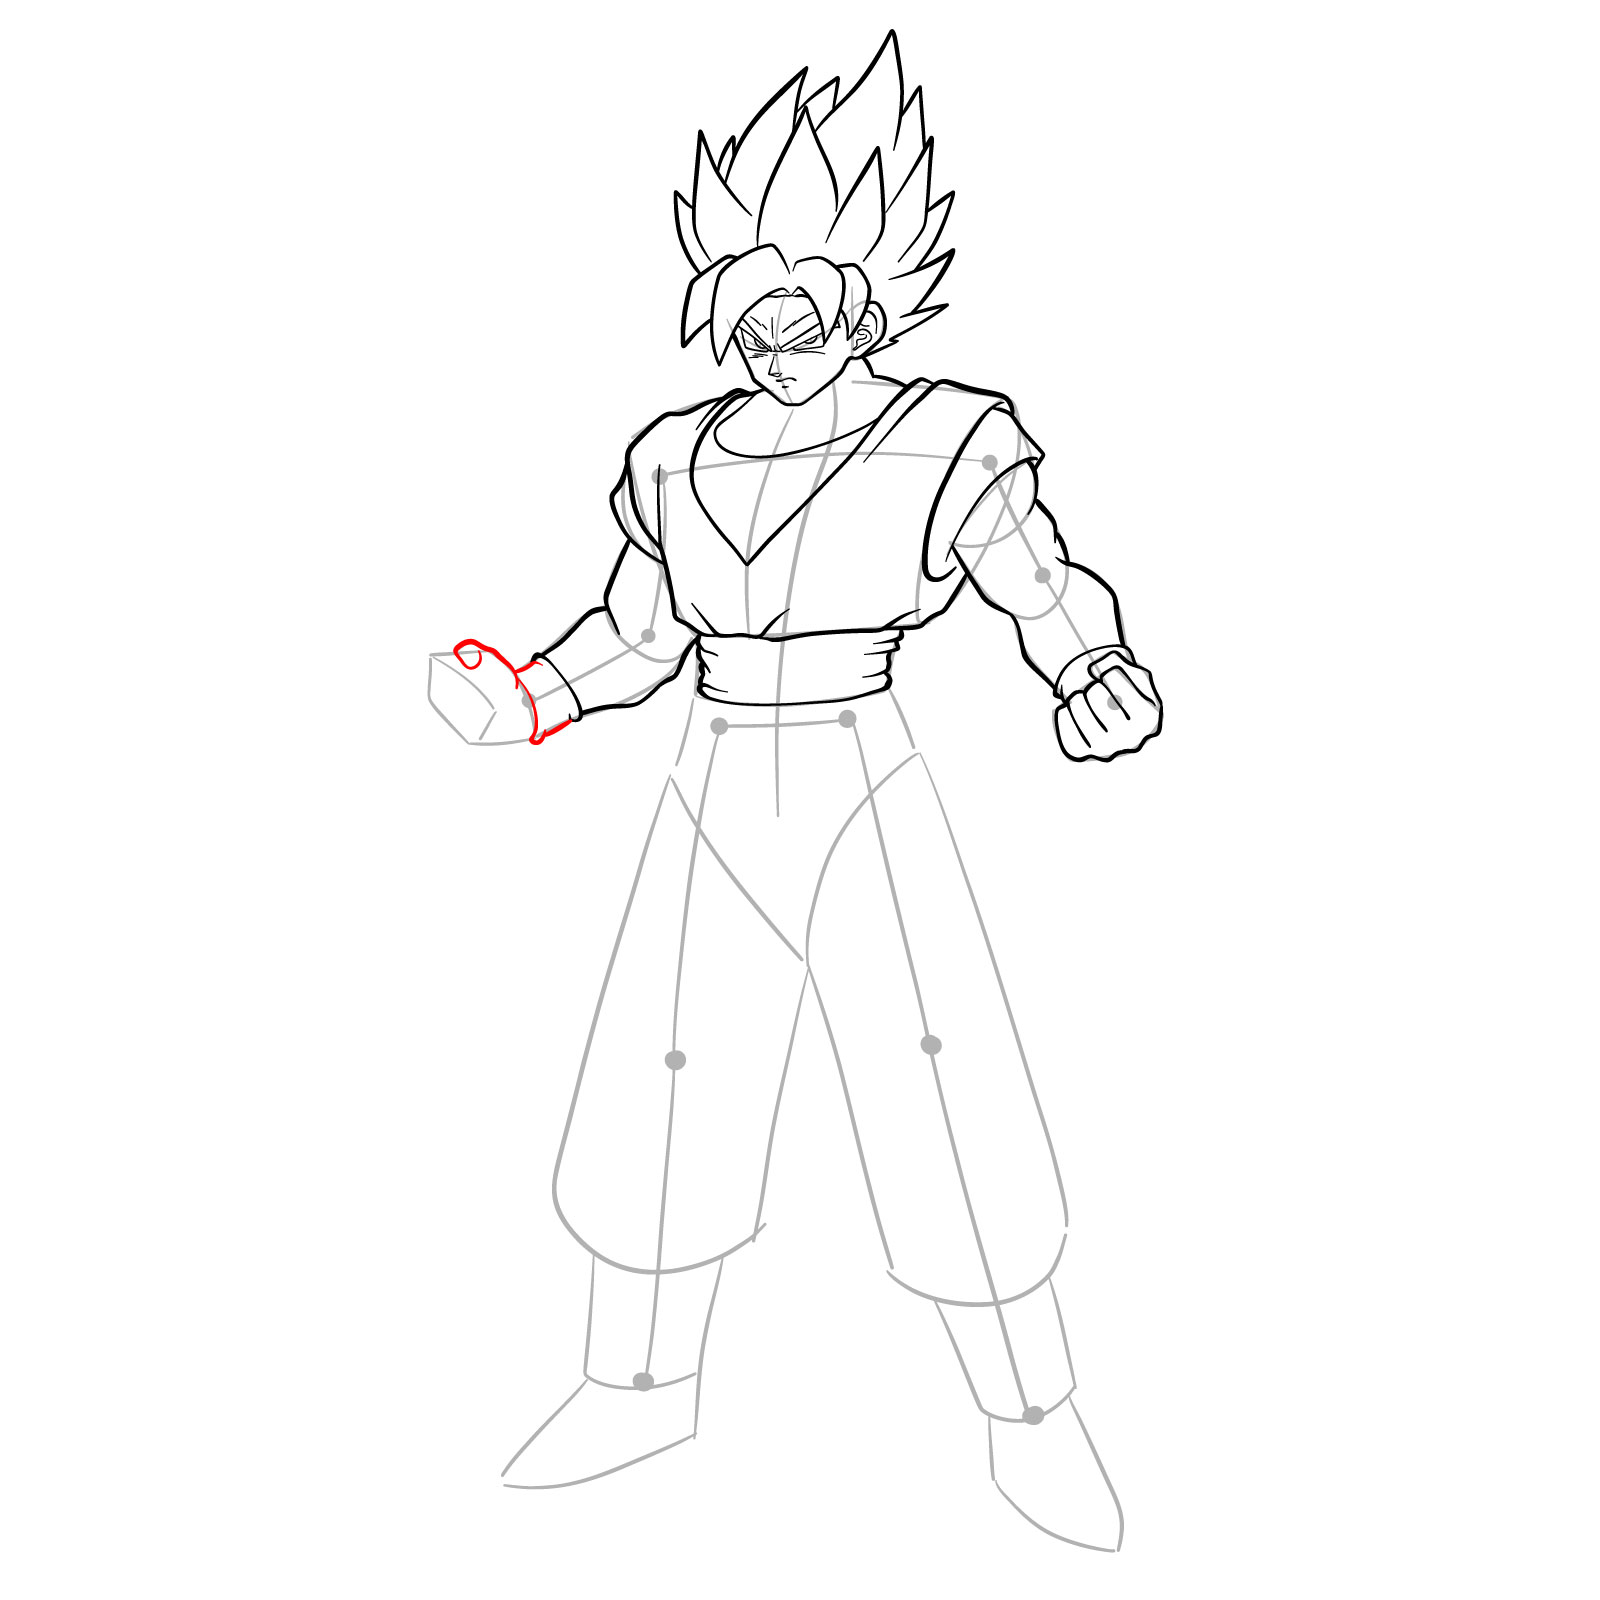 How to draw Goku in Super Saiyan form - step 26